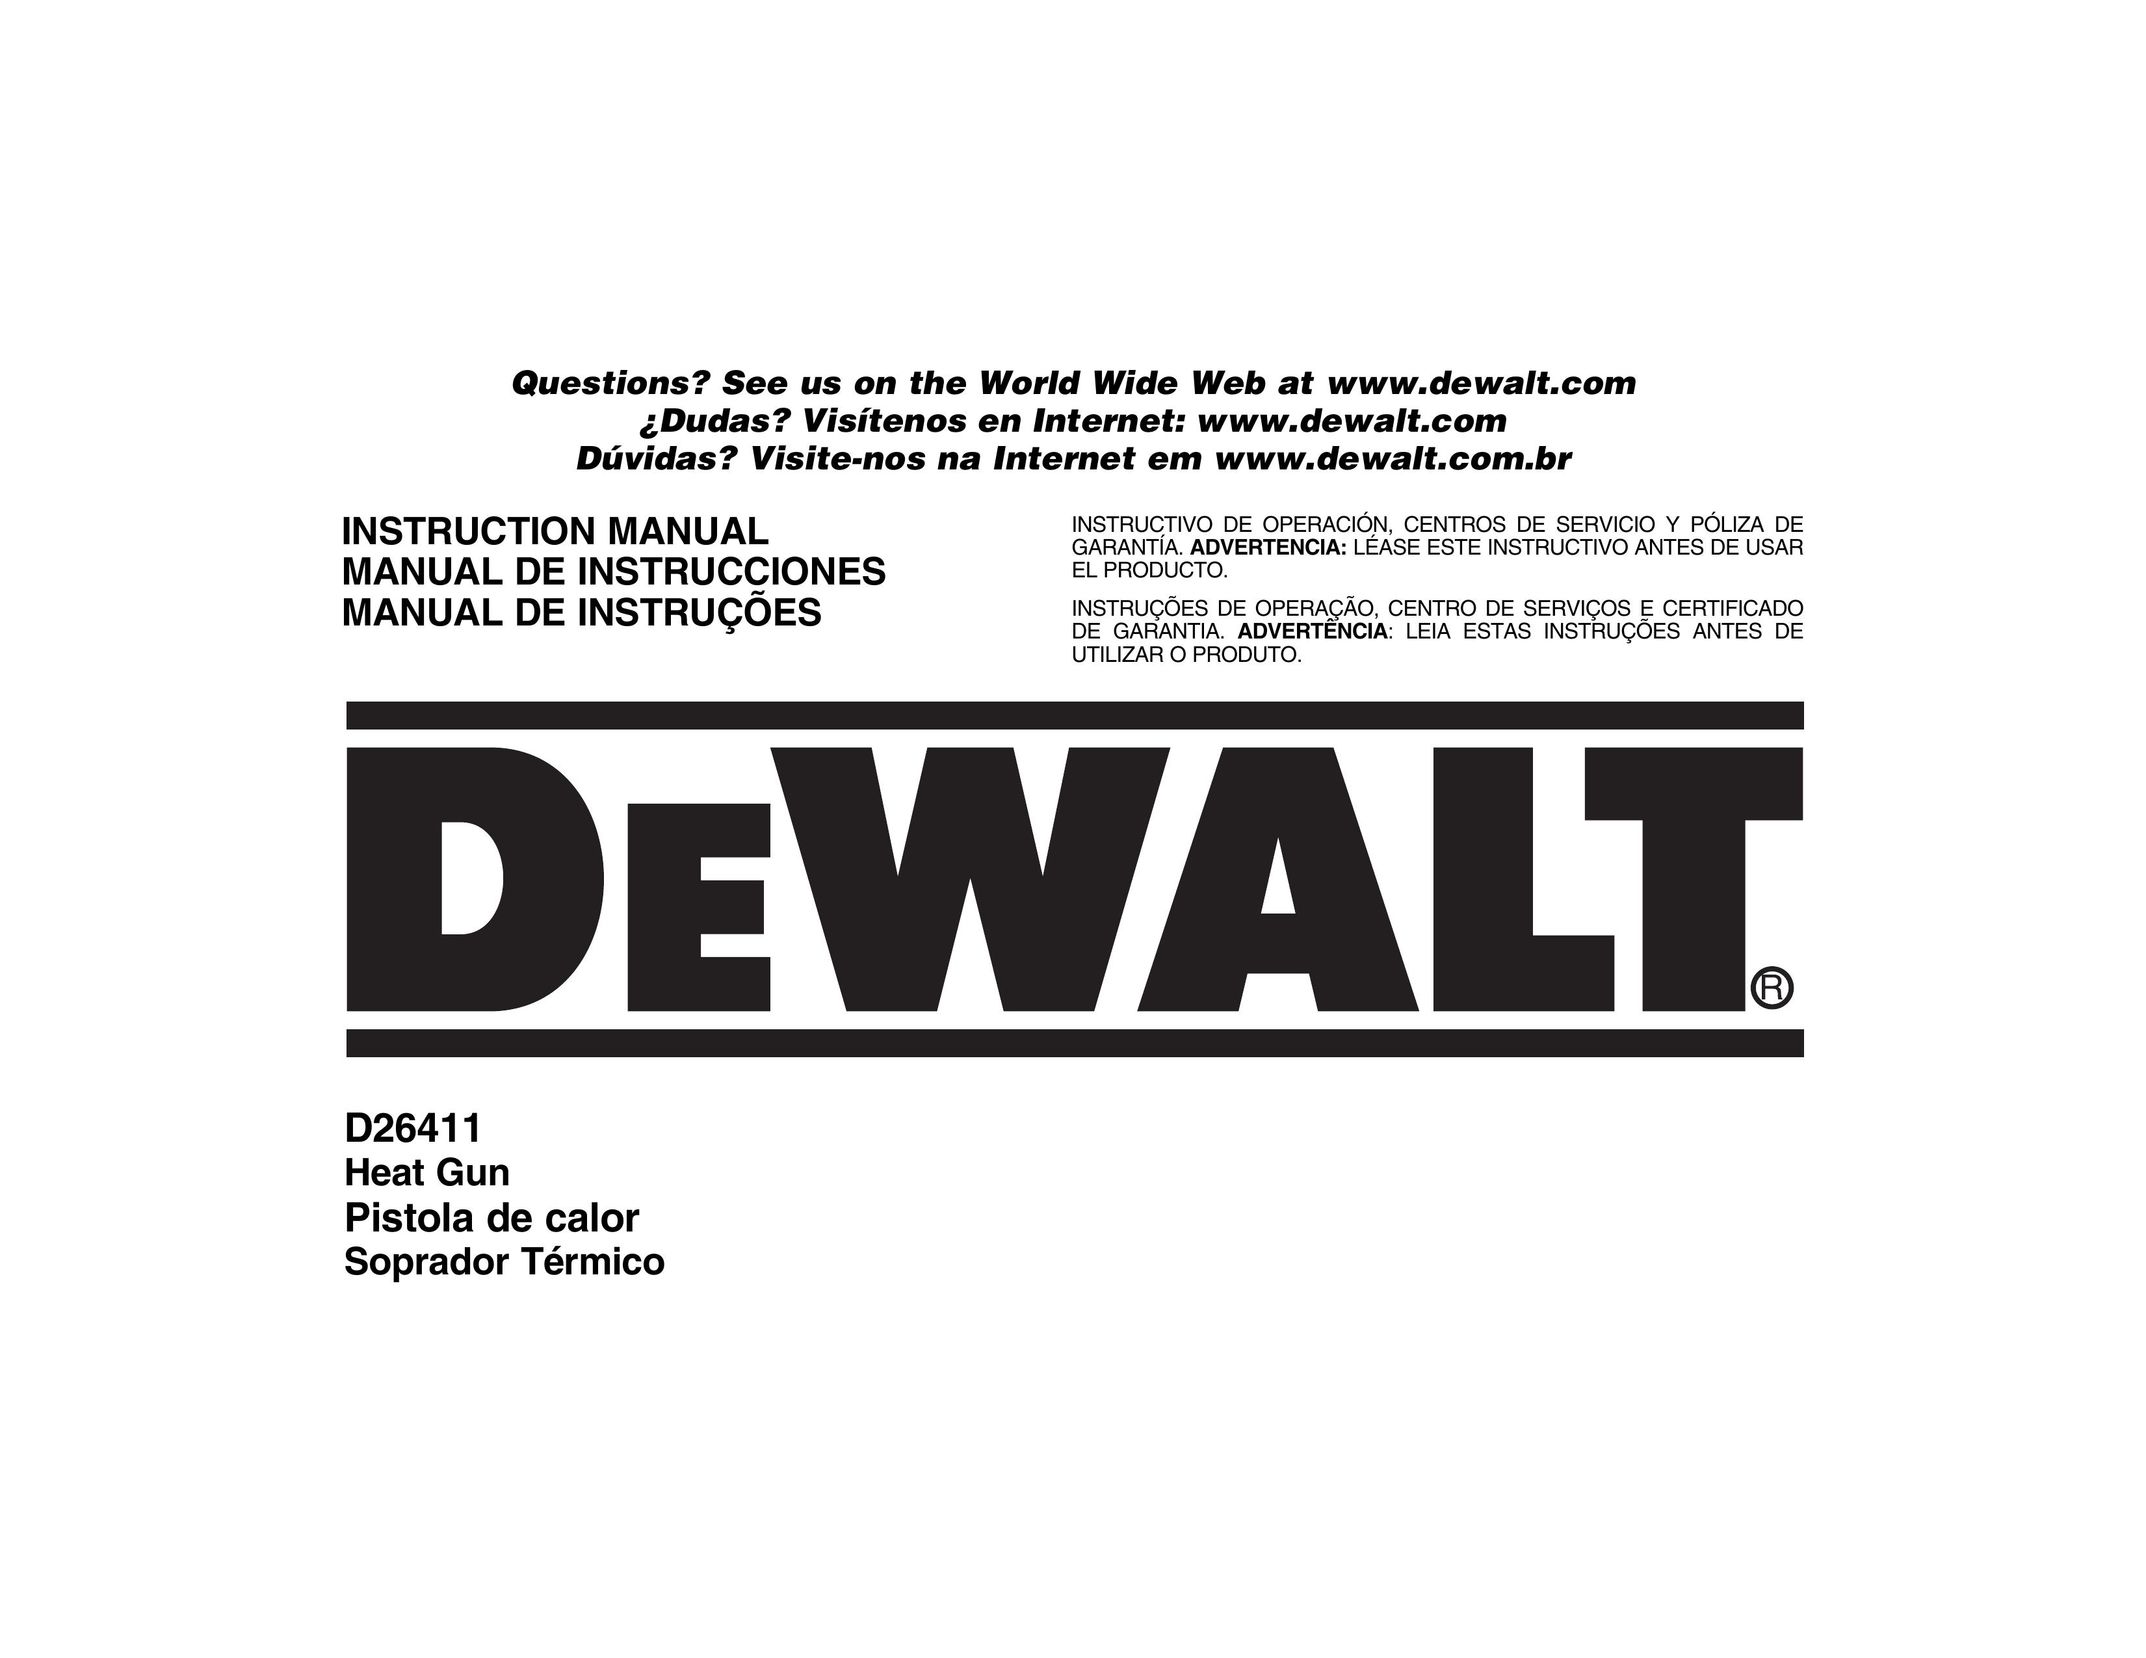 DeWalt D26411 Heat Gun User Manual